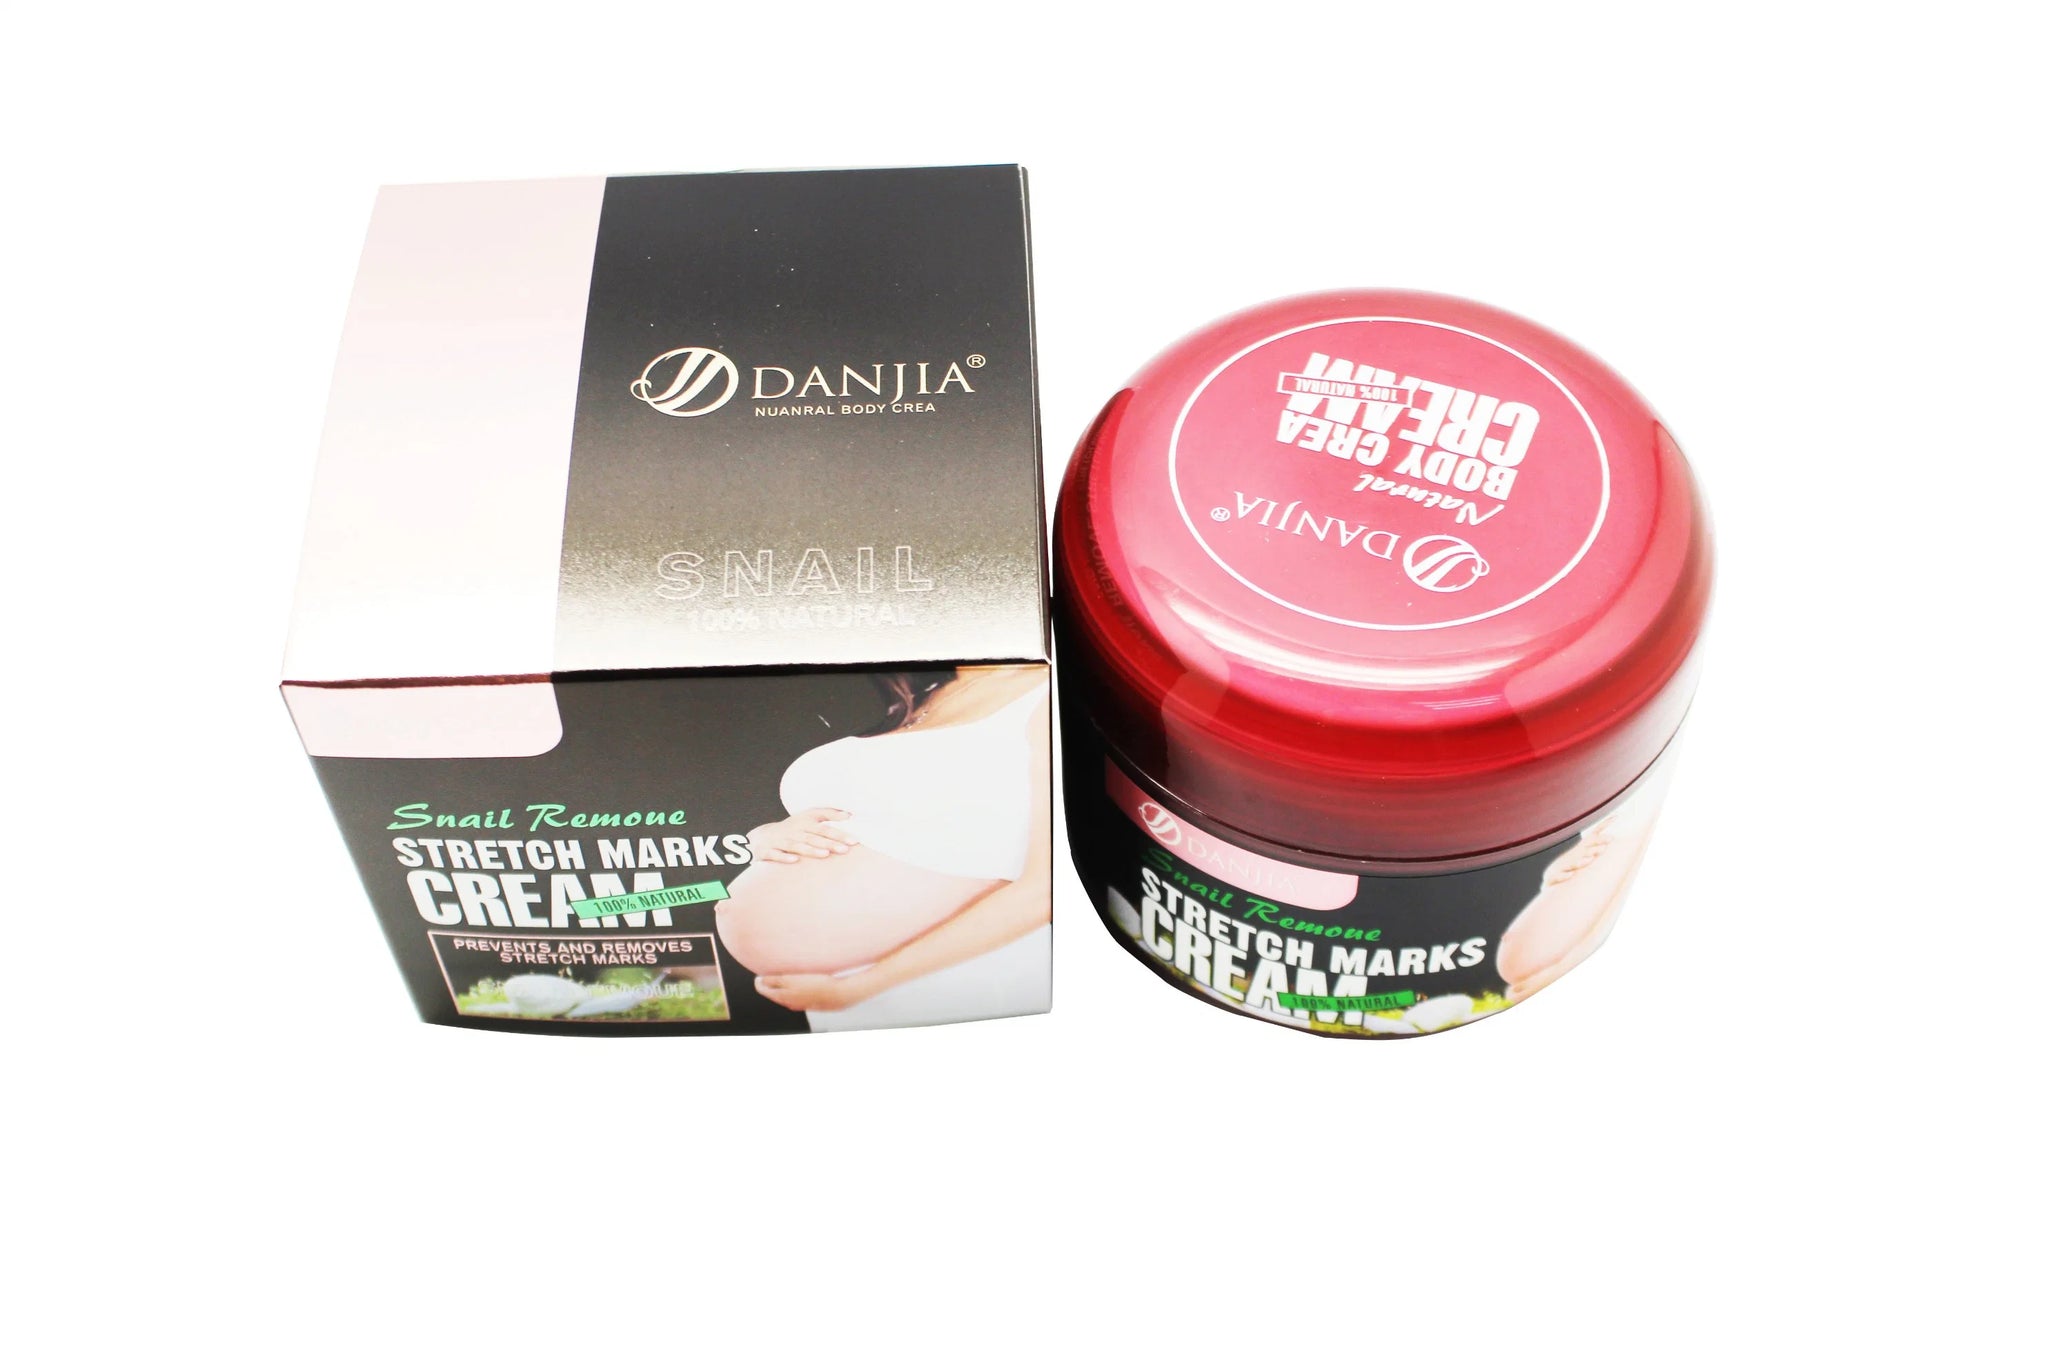 Danjia Fats Slimming Body Cream – Ladies Shop